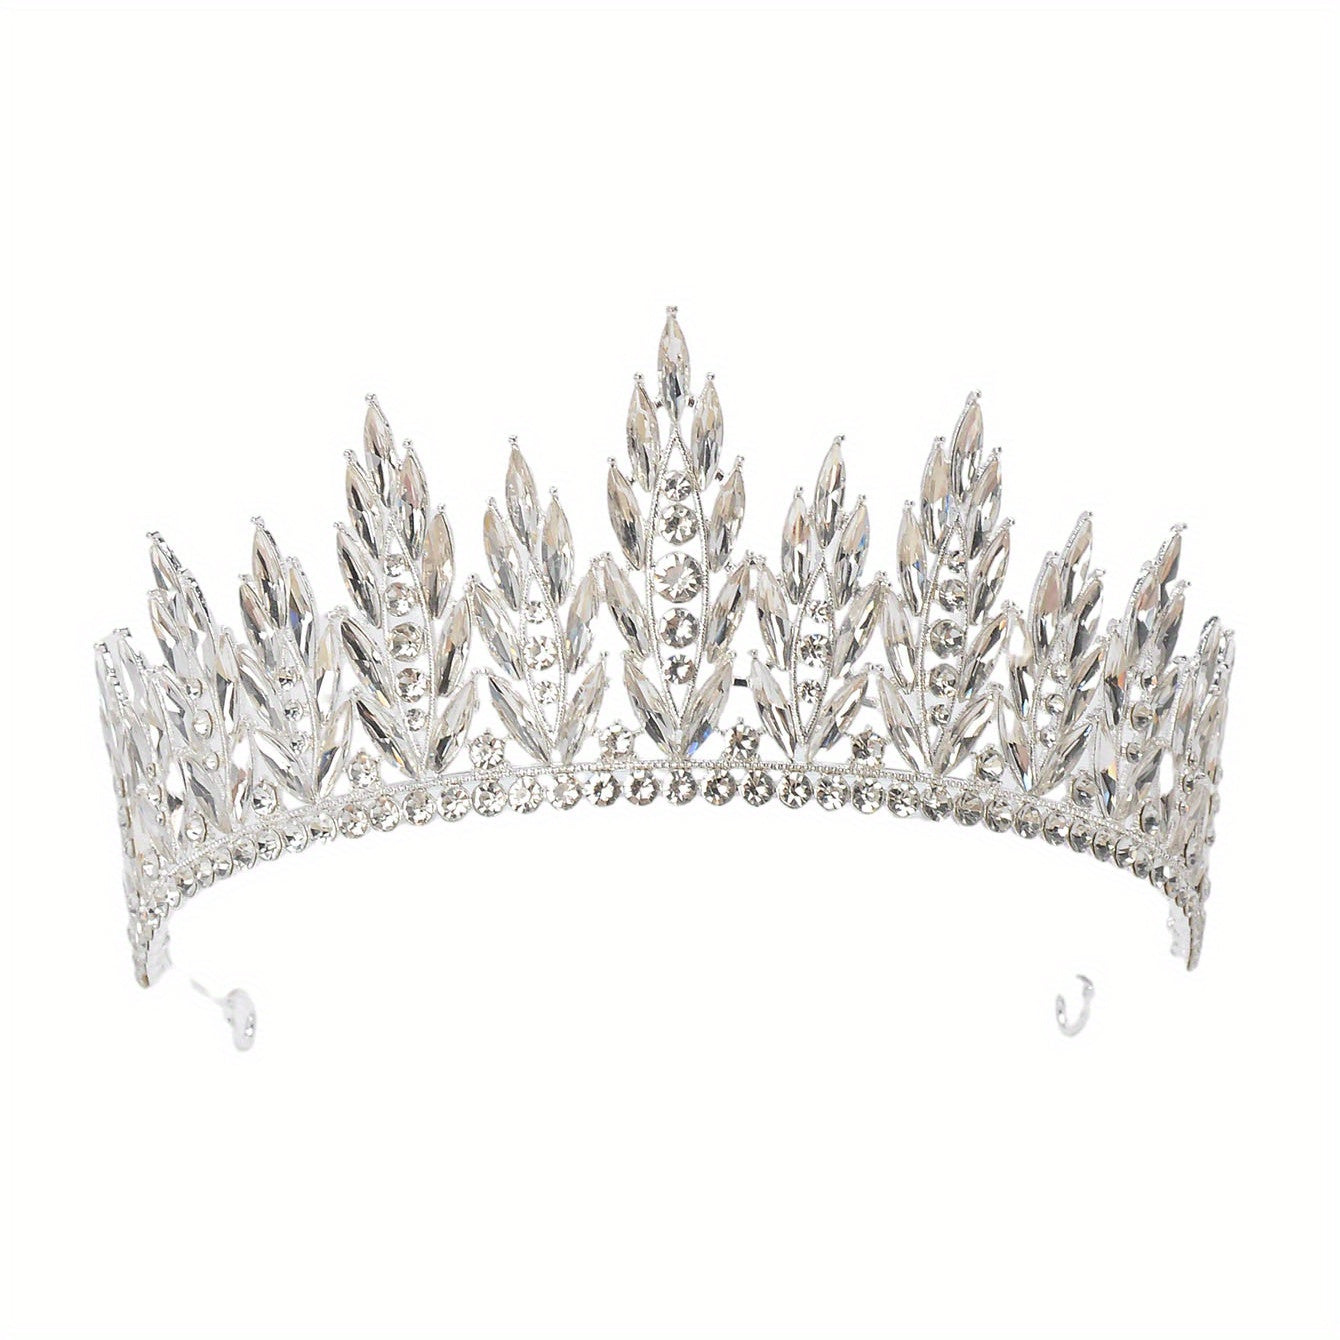 Wedding Tiara Crystal Flower Crown Glitter Headband Rhinestone Headpiece Bridal Wedding Hair Accessories For Women Girls Hair Jewelry For Party Prom